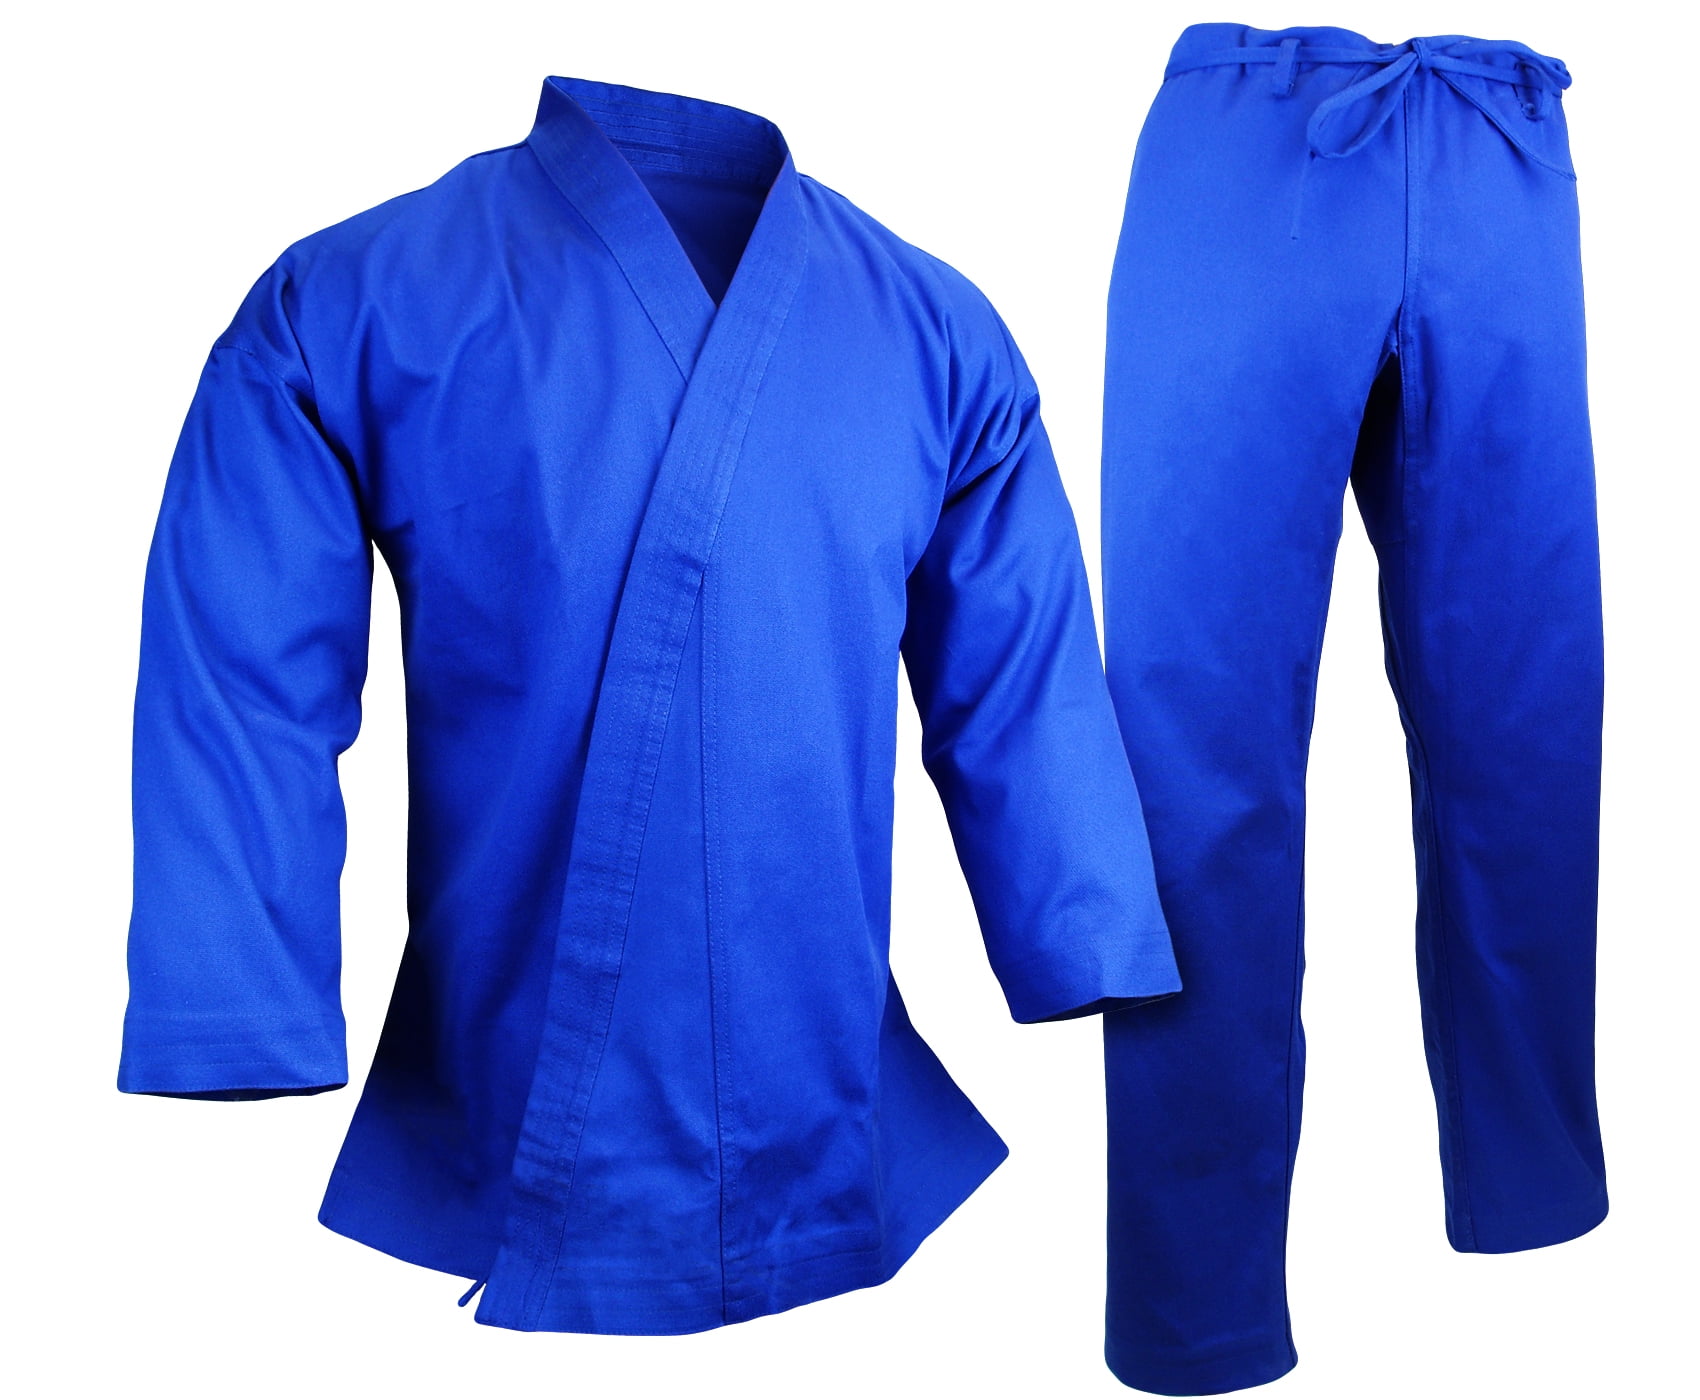 Prowin Corp Karate Jacket Heavy Wt 12 OZ 100% Cotton Preshrunk Martial Arts Gi New White/Black/Blue/Red